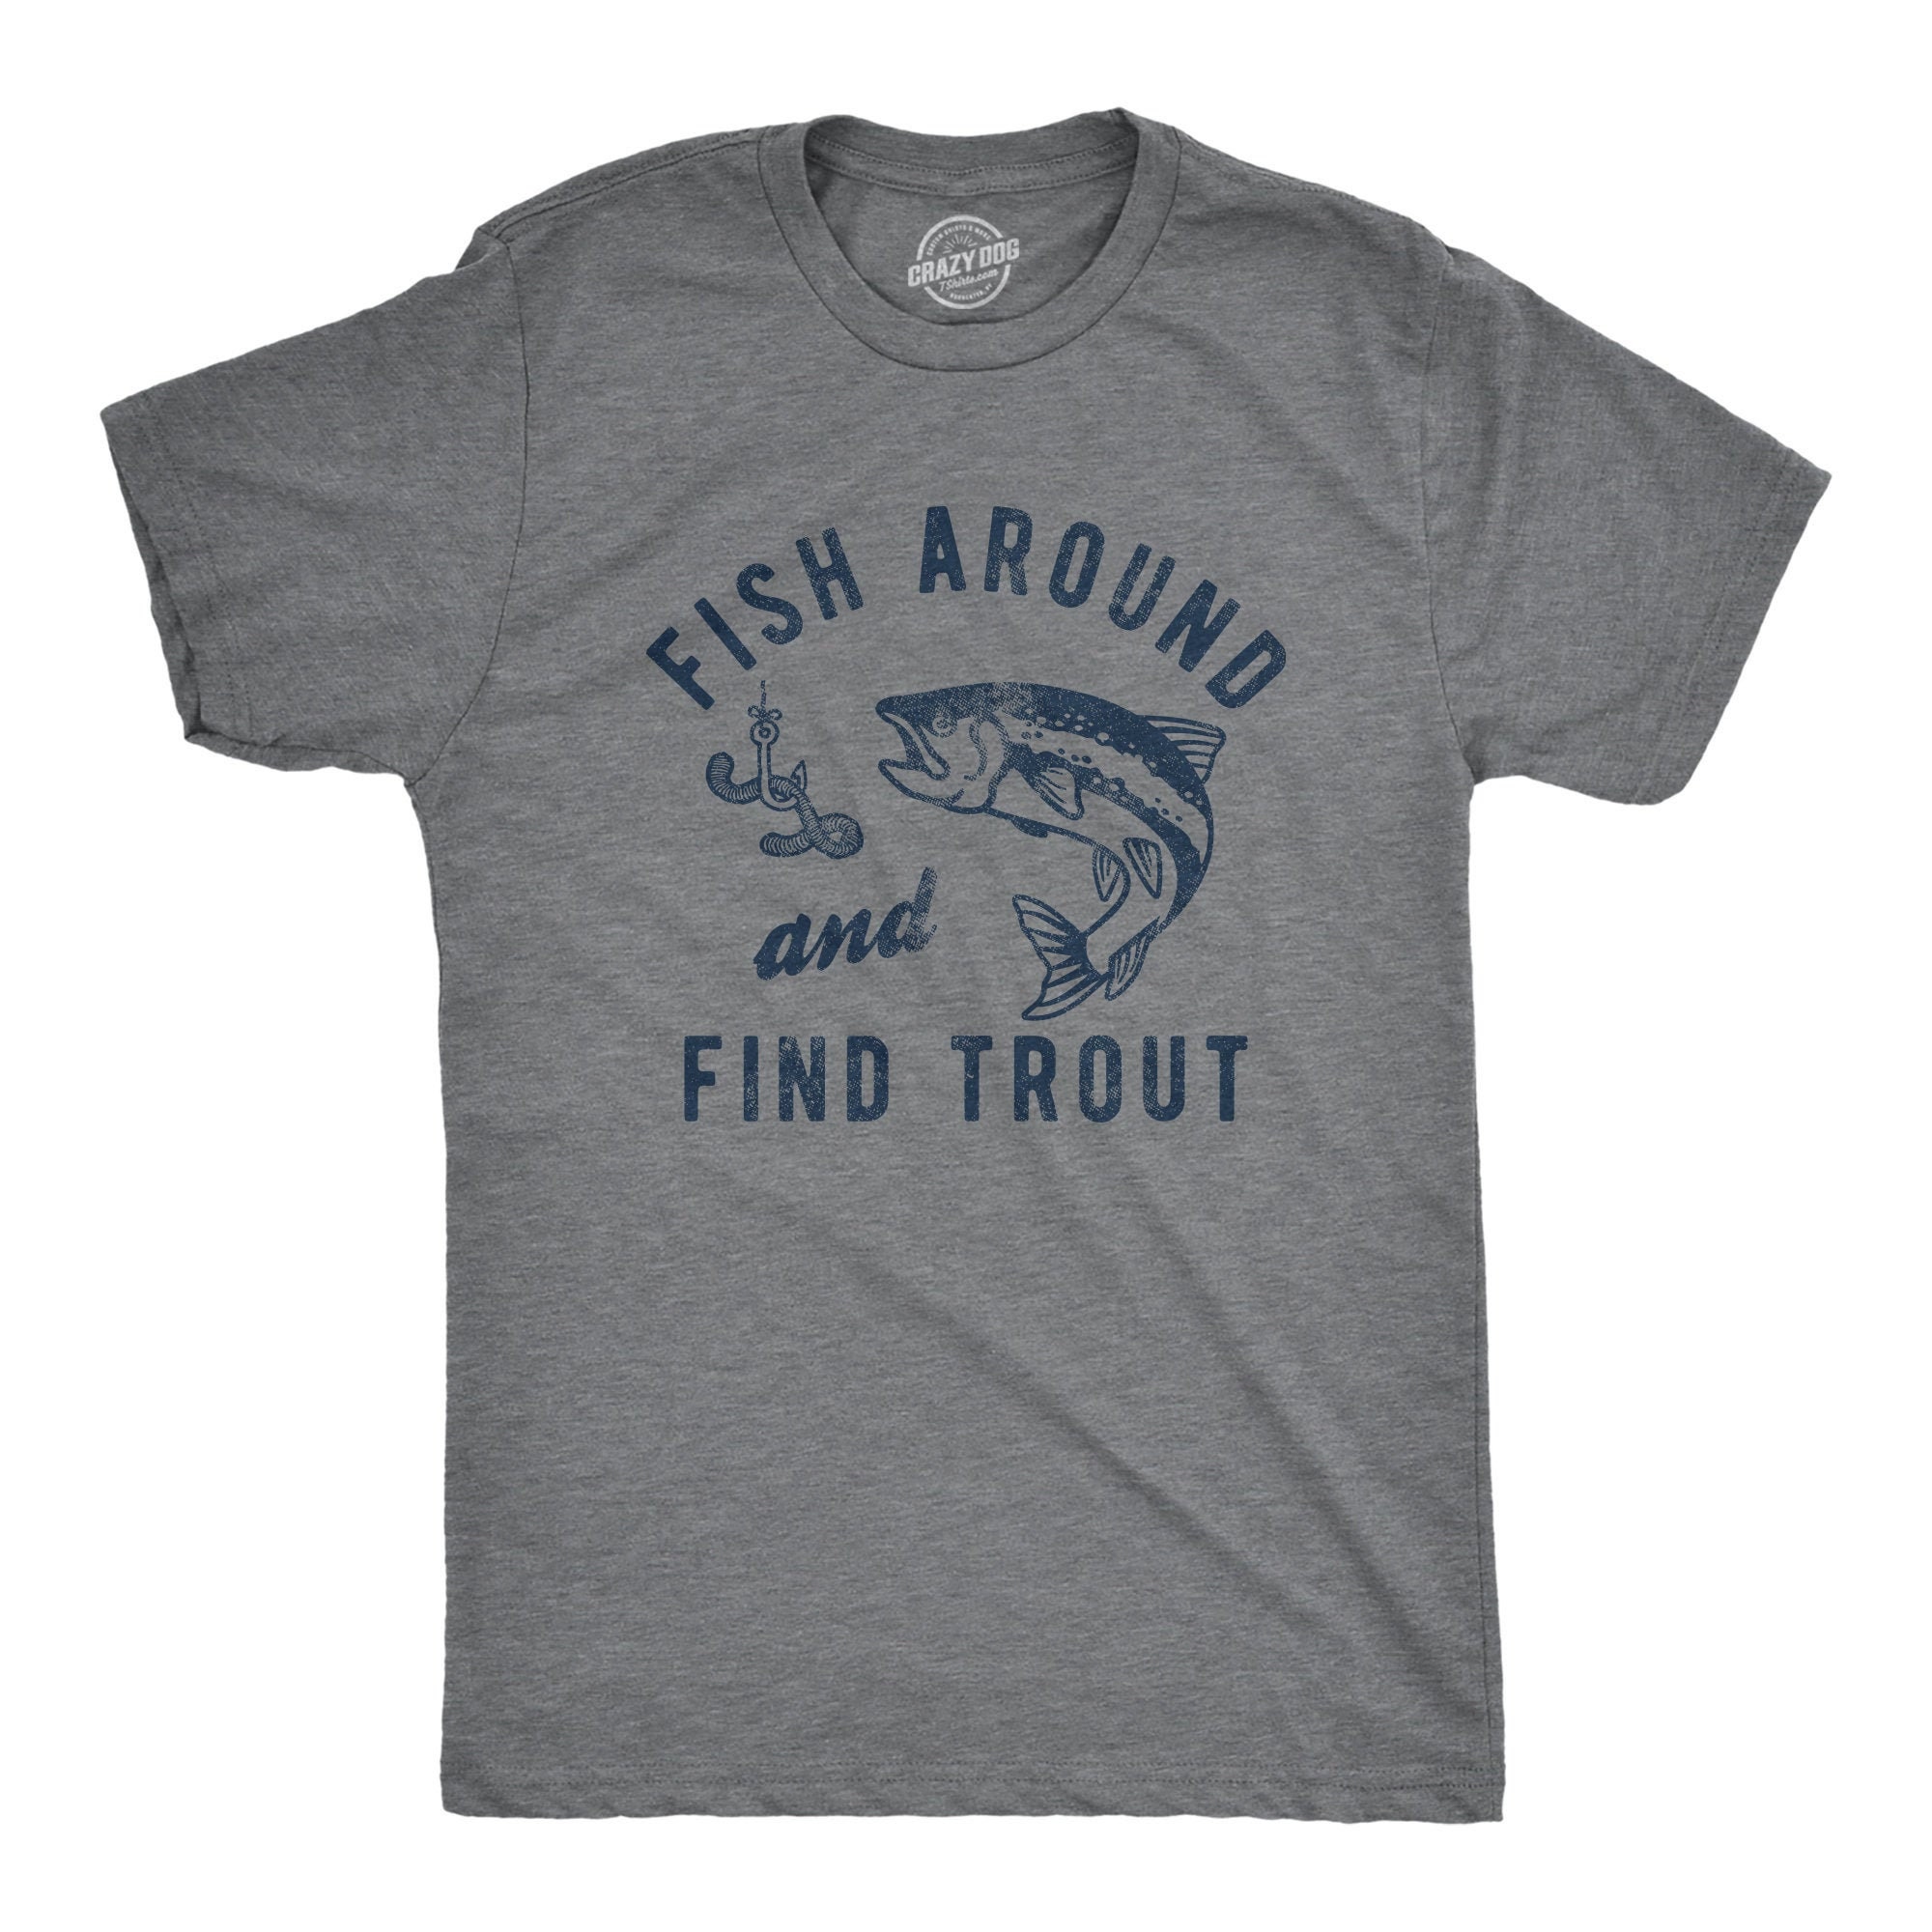 Buy Mens Fishing T Shirt, Funny Fishing Shirt, Fishing Graphic Tee